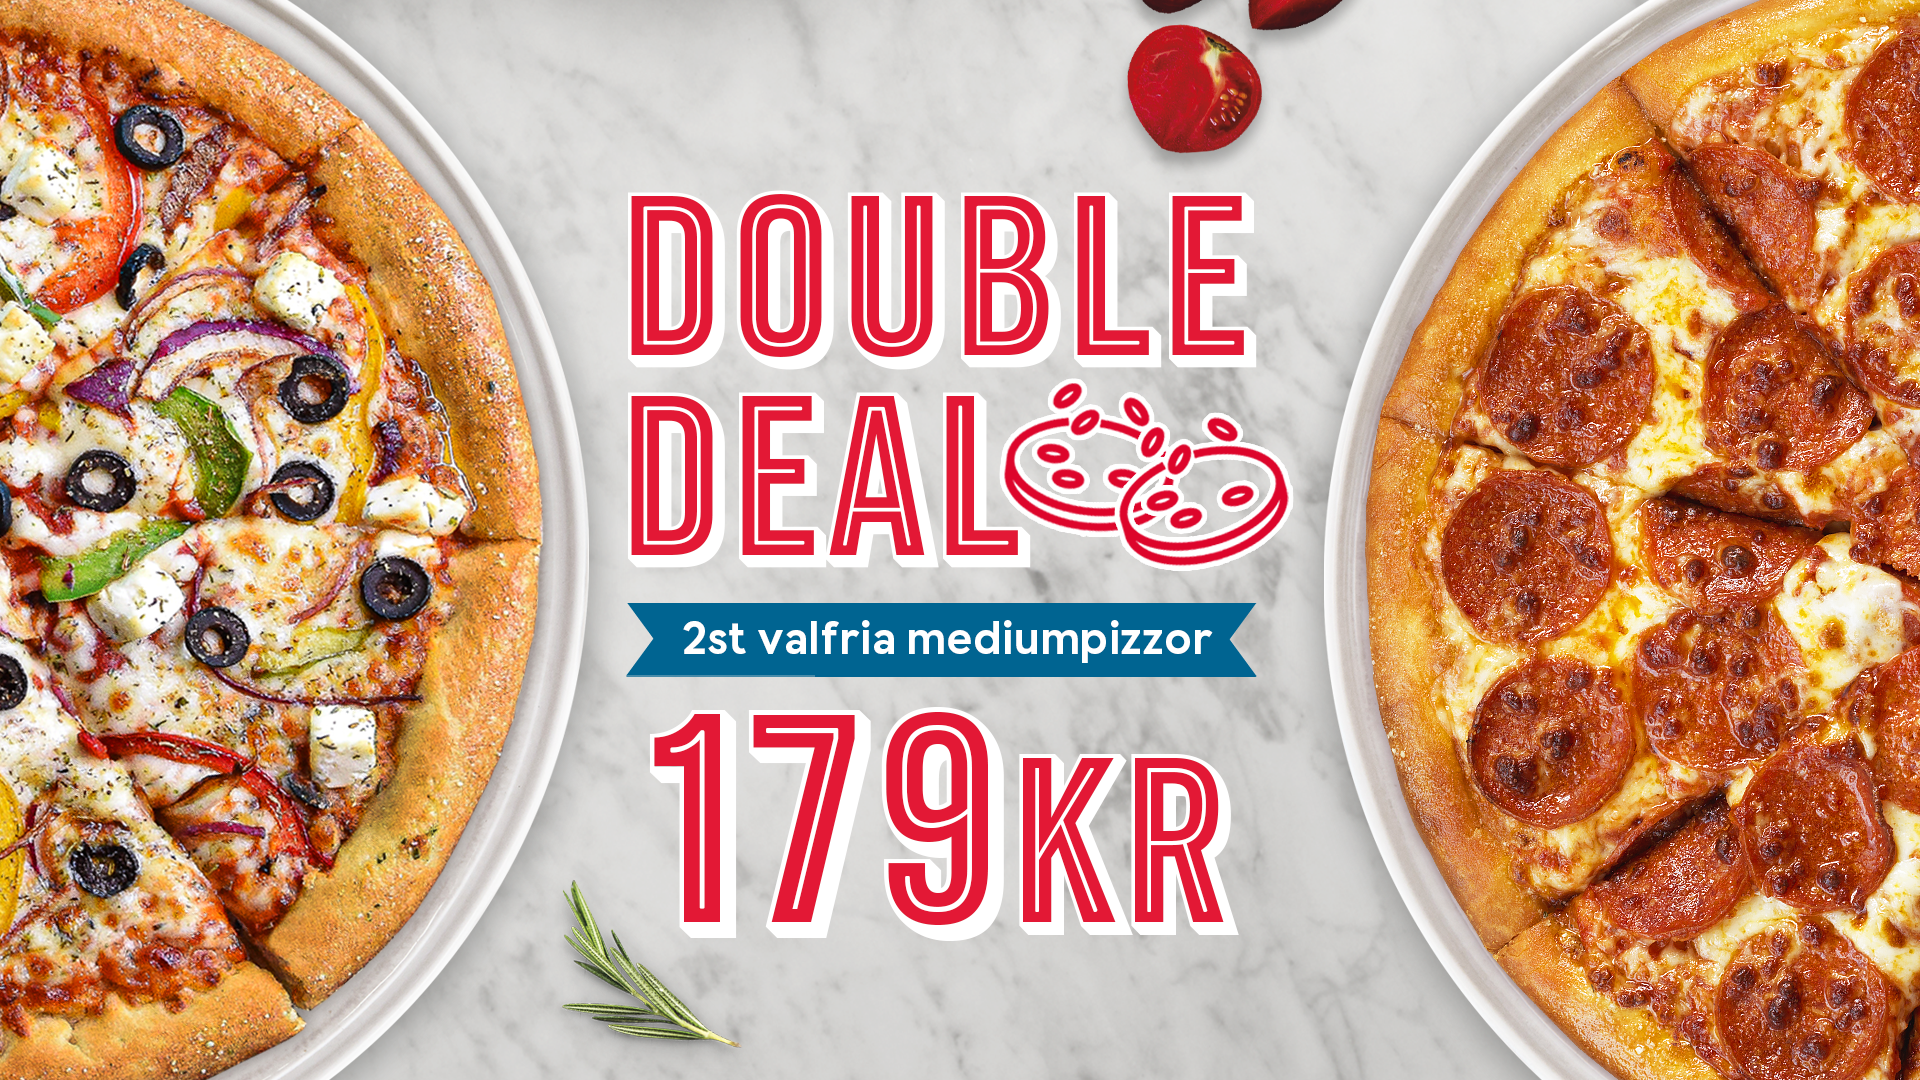 Double deal: 2st valfria mediumpizzor - 179kr